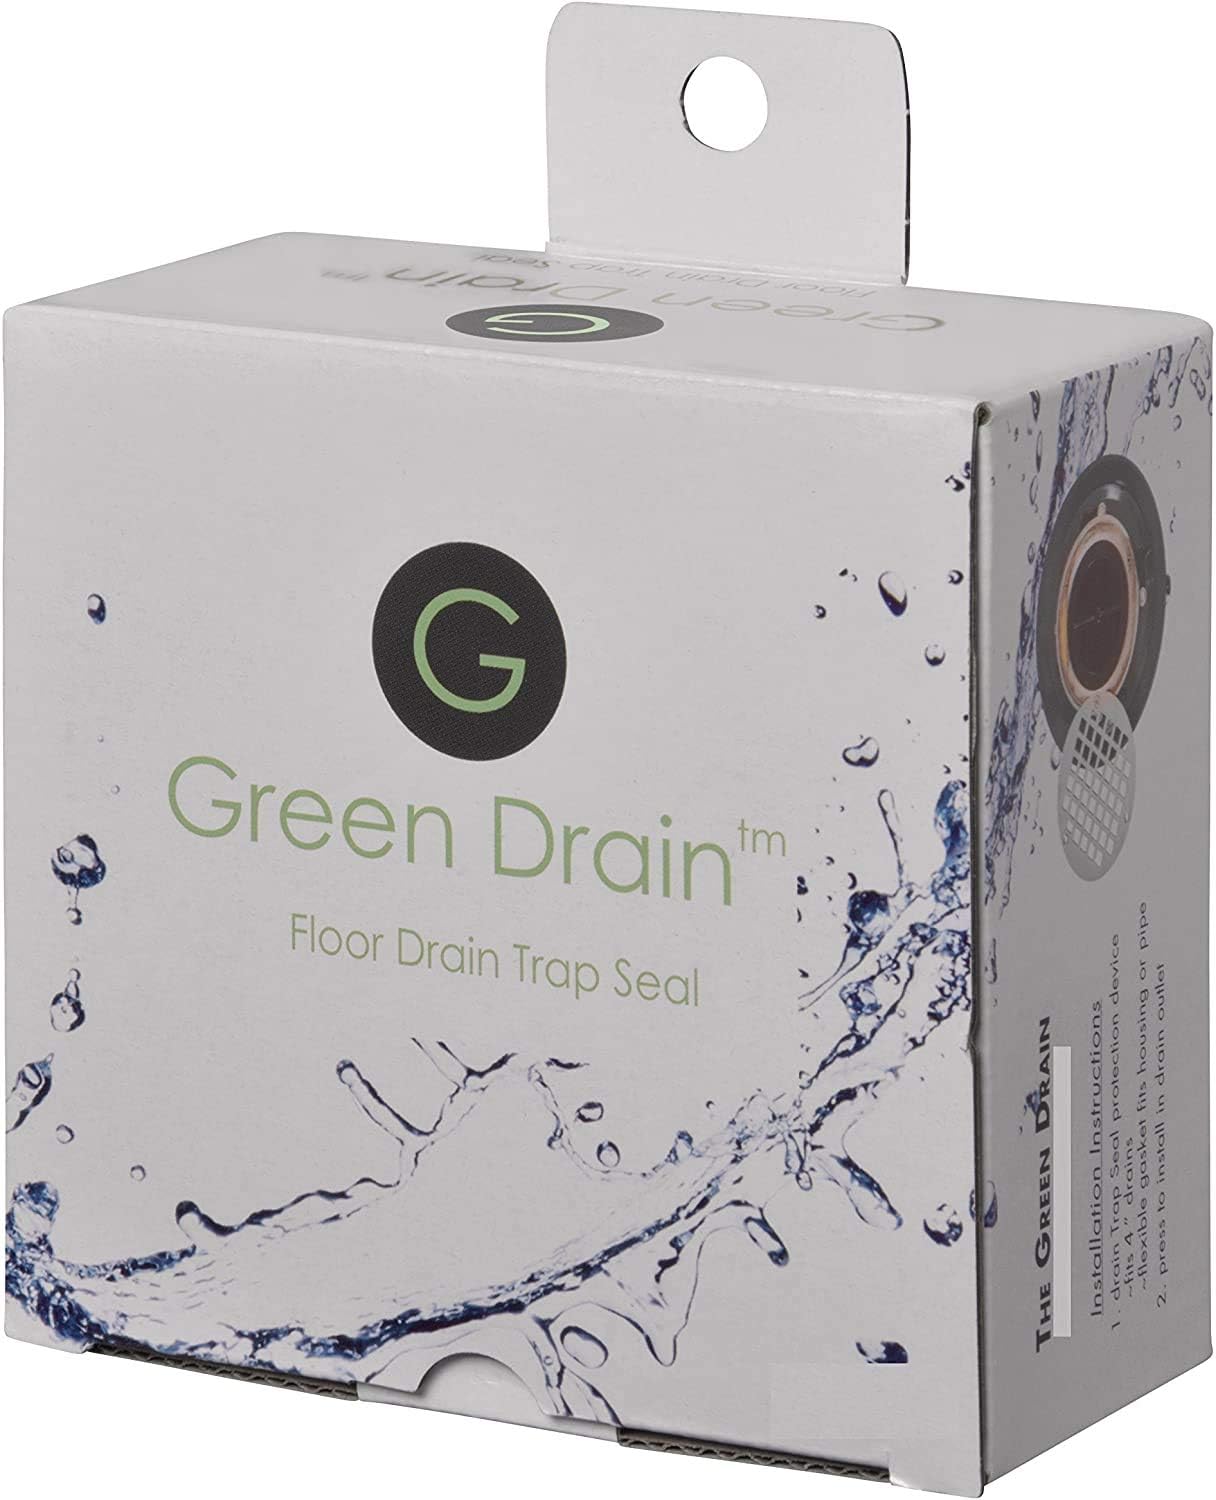 2" Waterless Drain Trap Seal - Green Drain